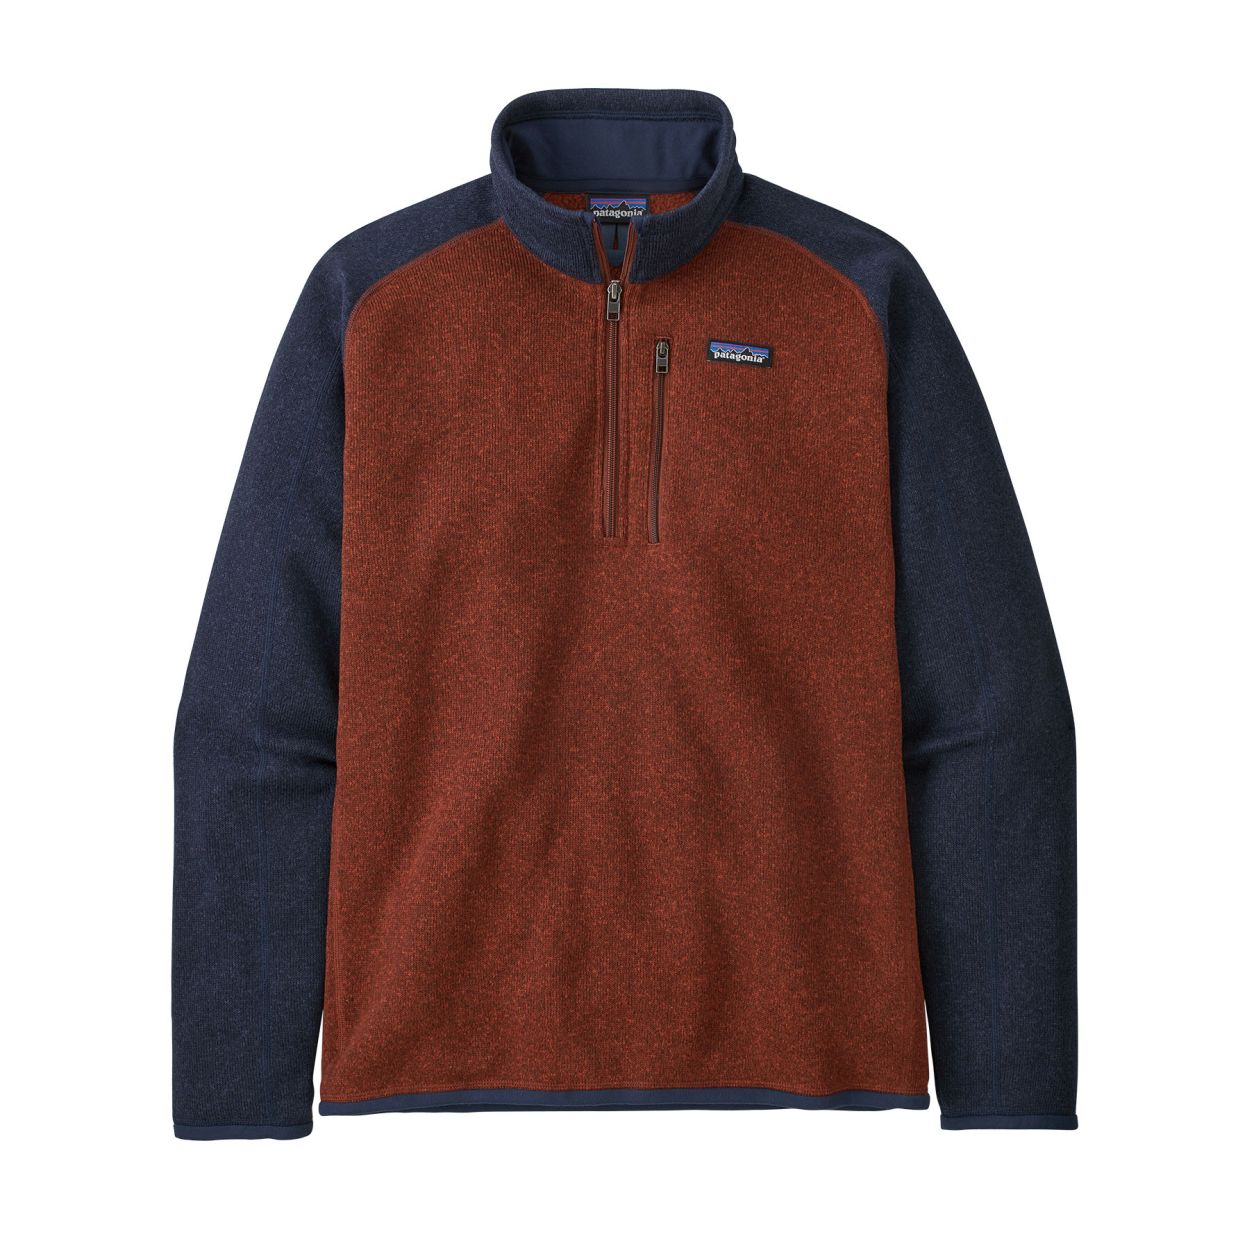 M's Better Sweater 1/4 Zip, barn red w/new navy